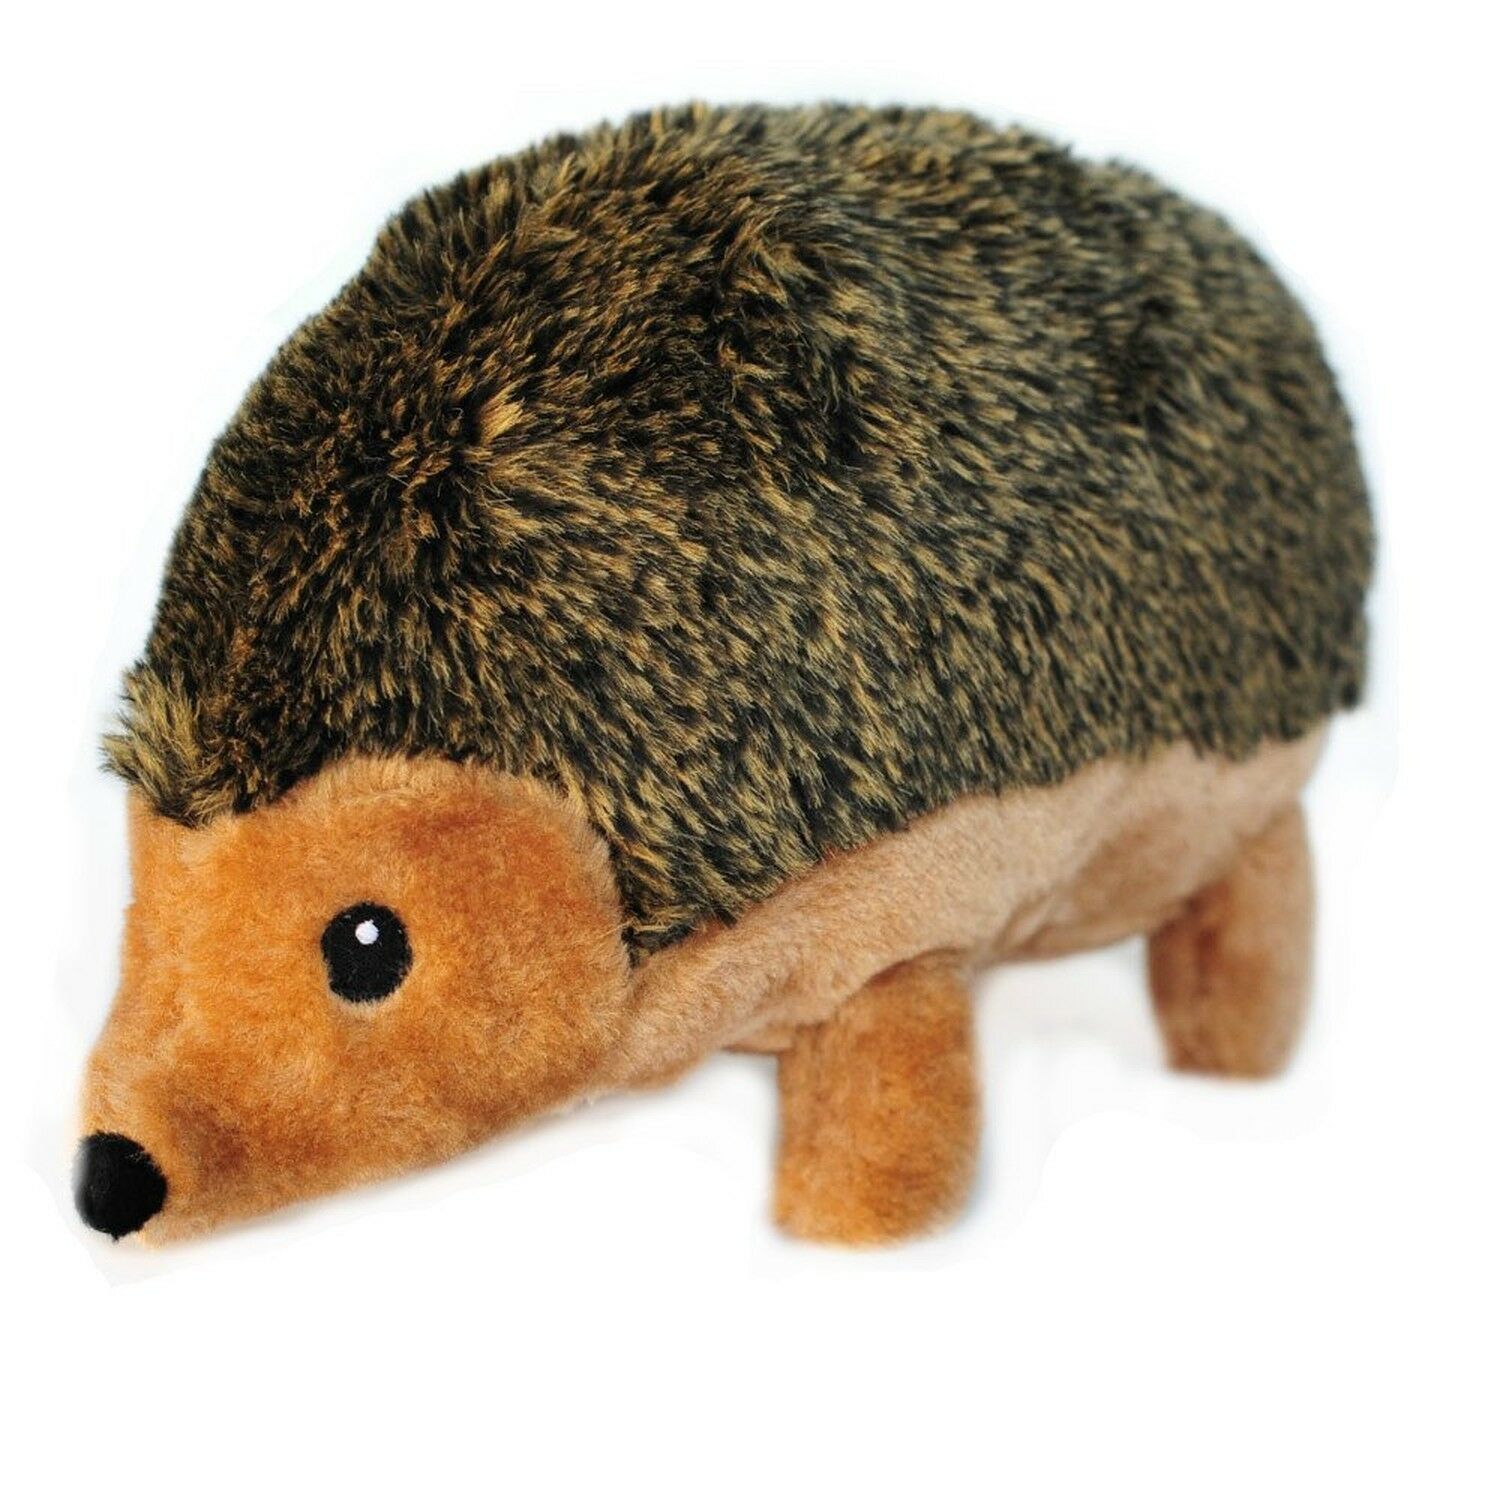 Zippy Paws Hedgehog, Dog Toys, Plush Toy,